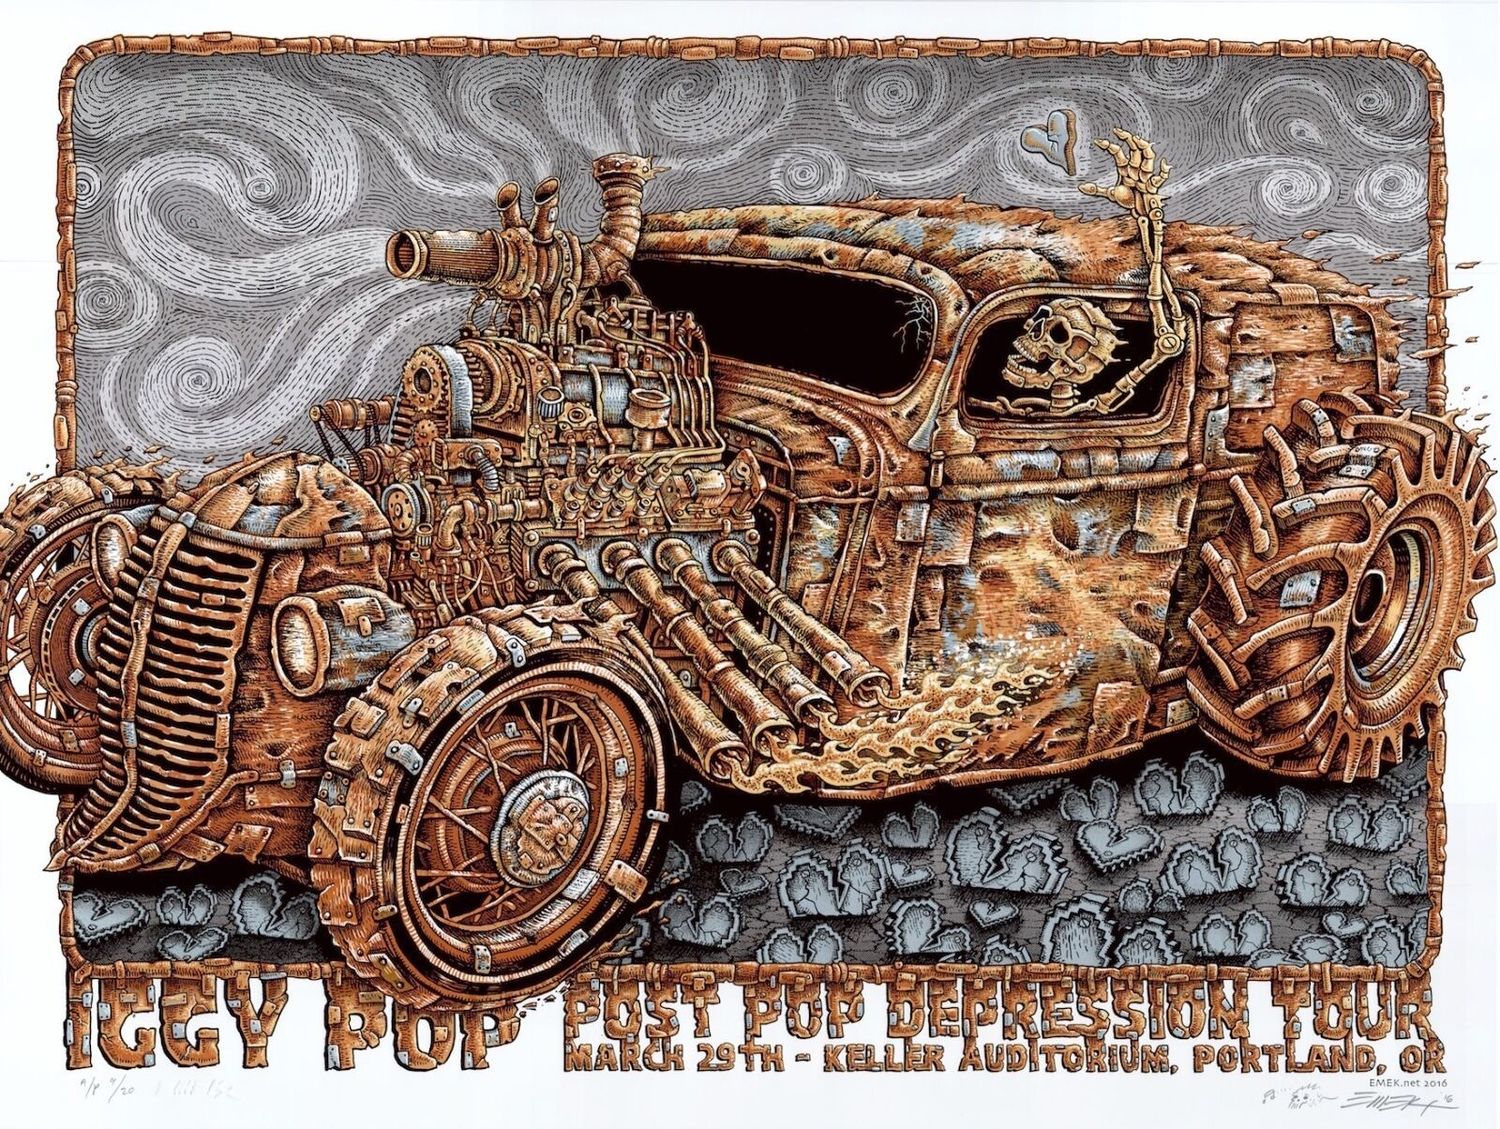 EMEK – 2016 “Rust Rocket” Iggy Pop Farewell Tour – “Post POP Depression” w/ Josh Homme from QOTSA – at the Keller Auditorium in Portland – Limited Edition Concert Poster